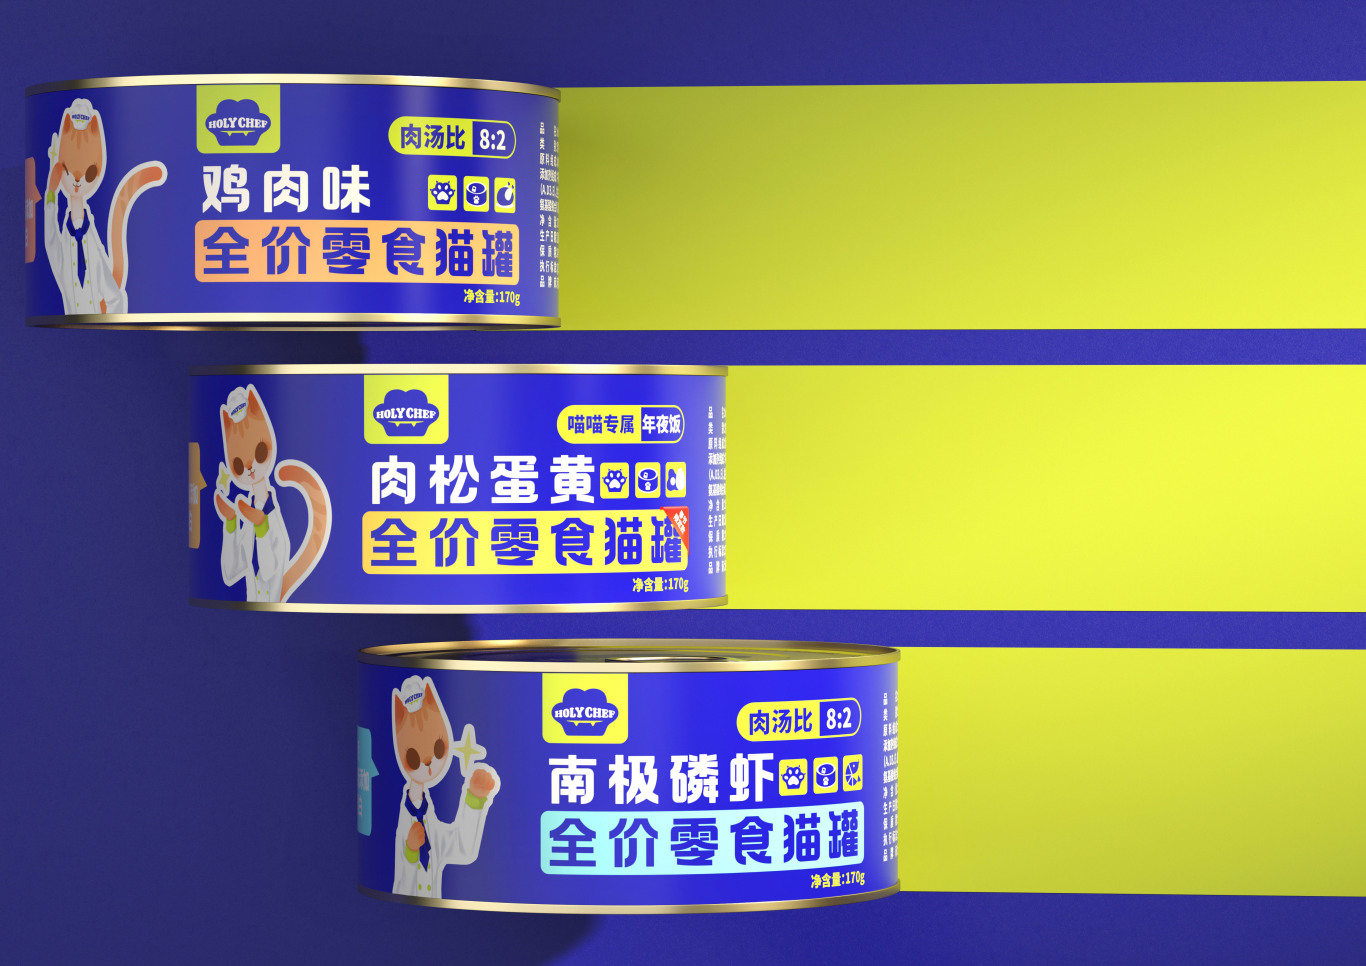 HOLY CHEF寵物罐頭包裝設計-五藏者圖6